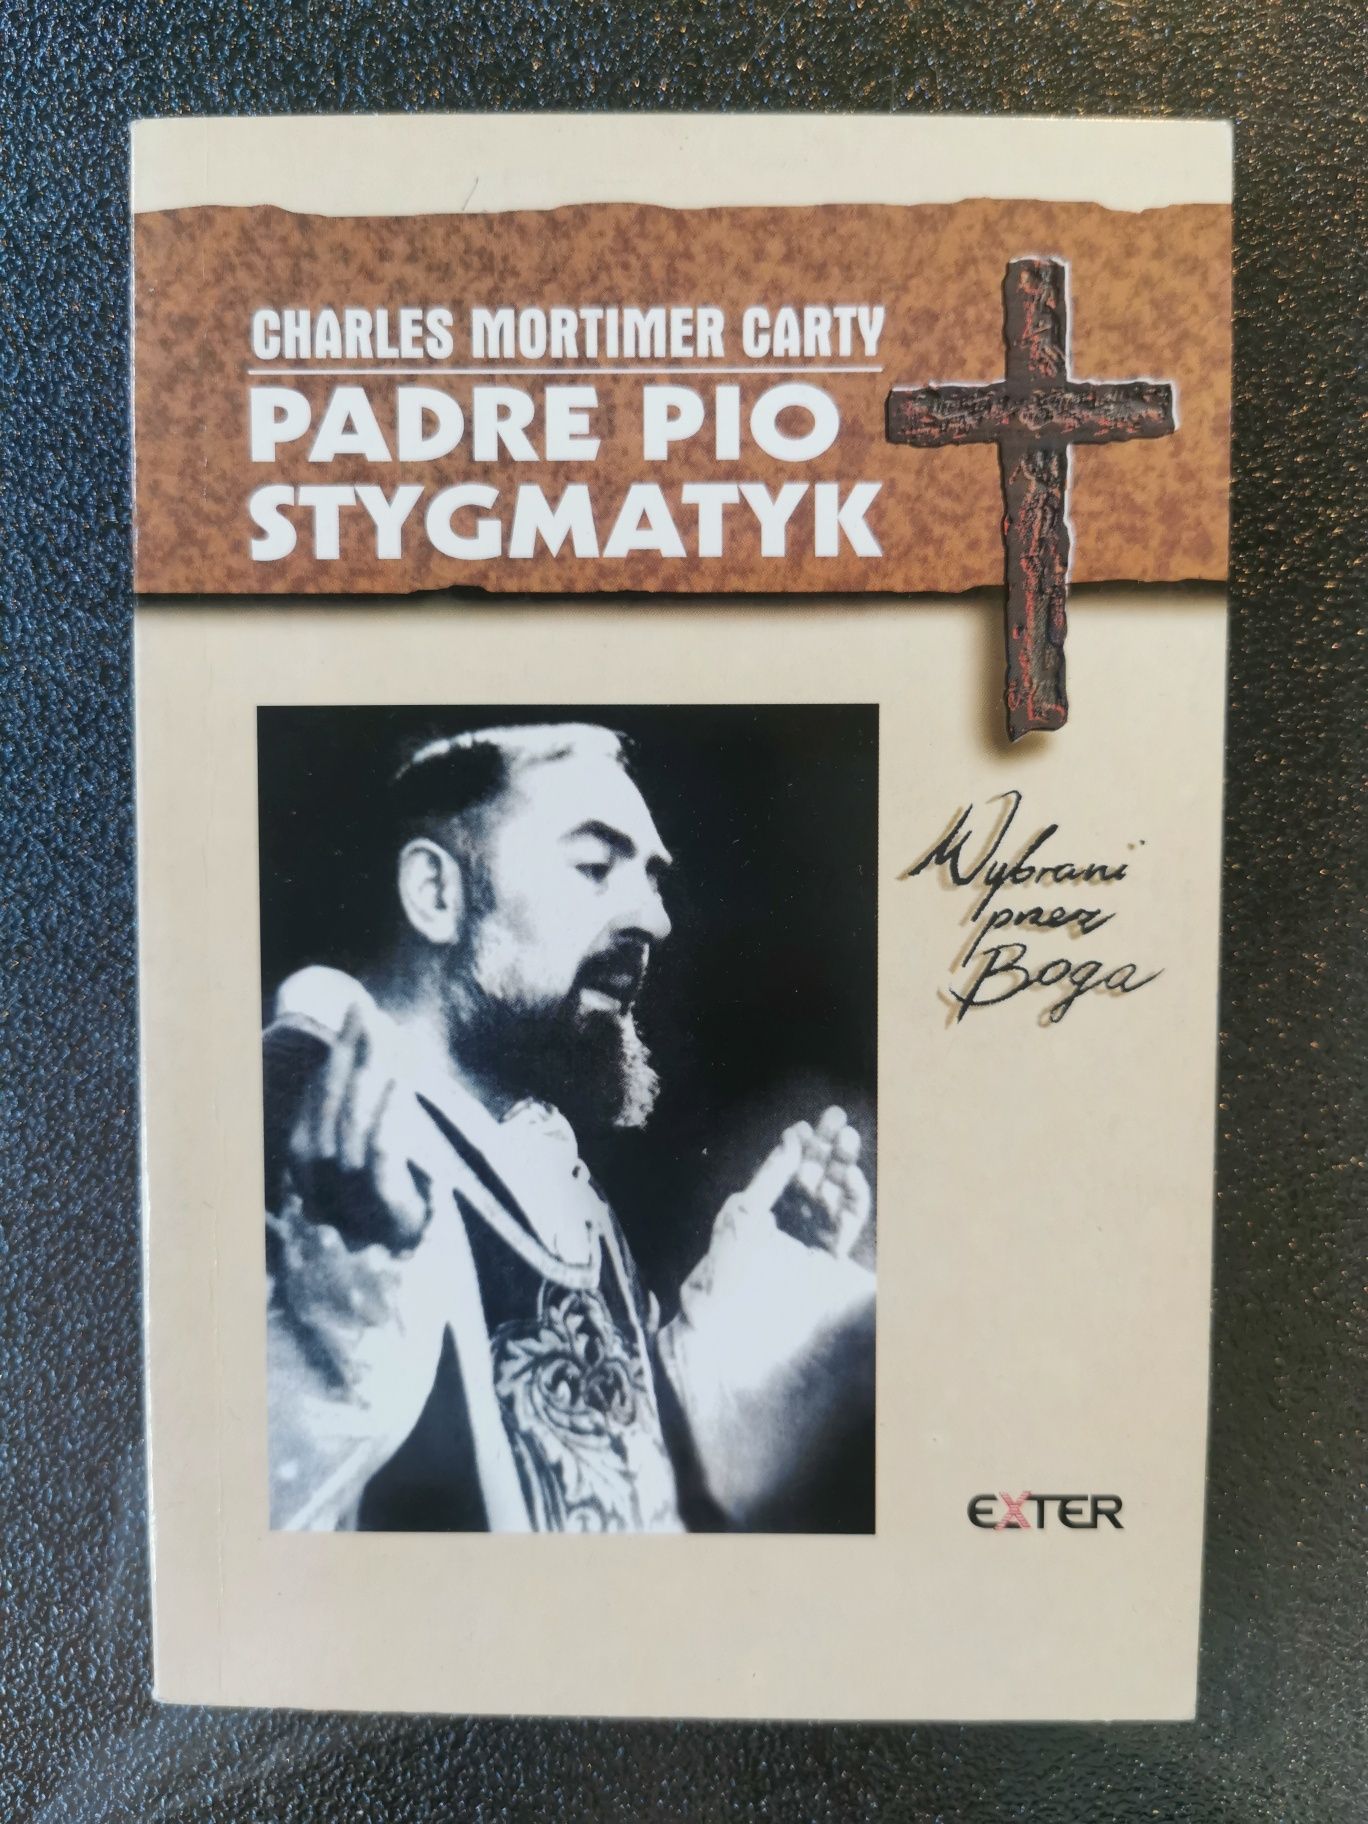 Padre Pio stygmatyk 
Charles Mortimer Carty